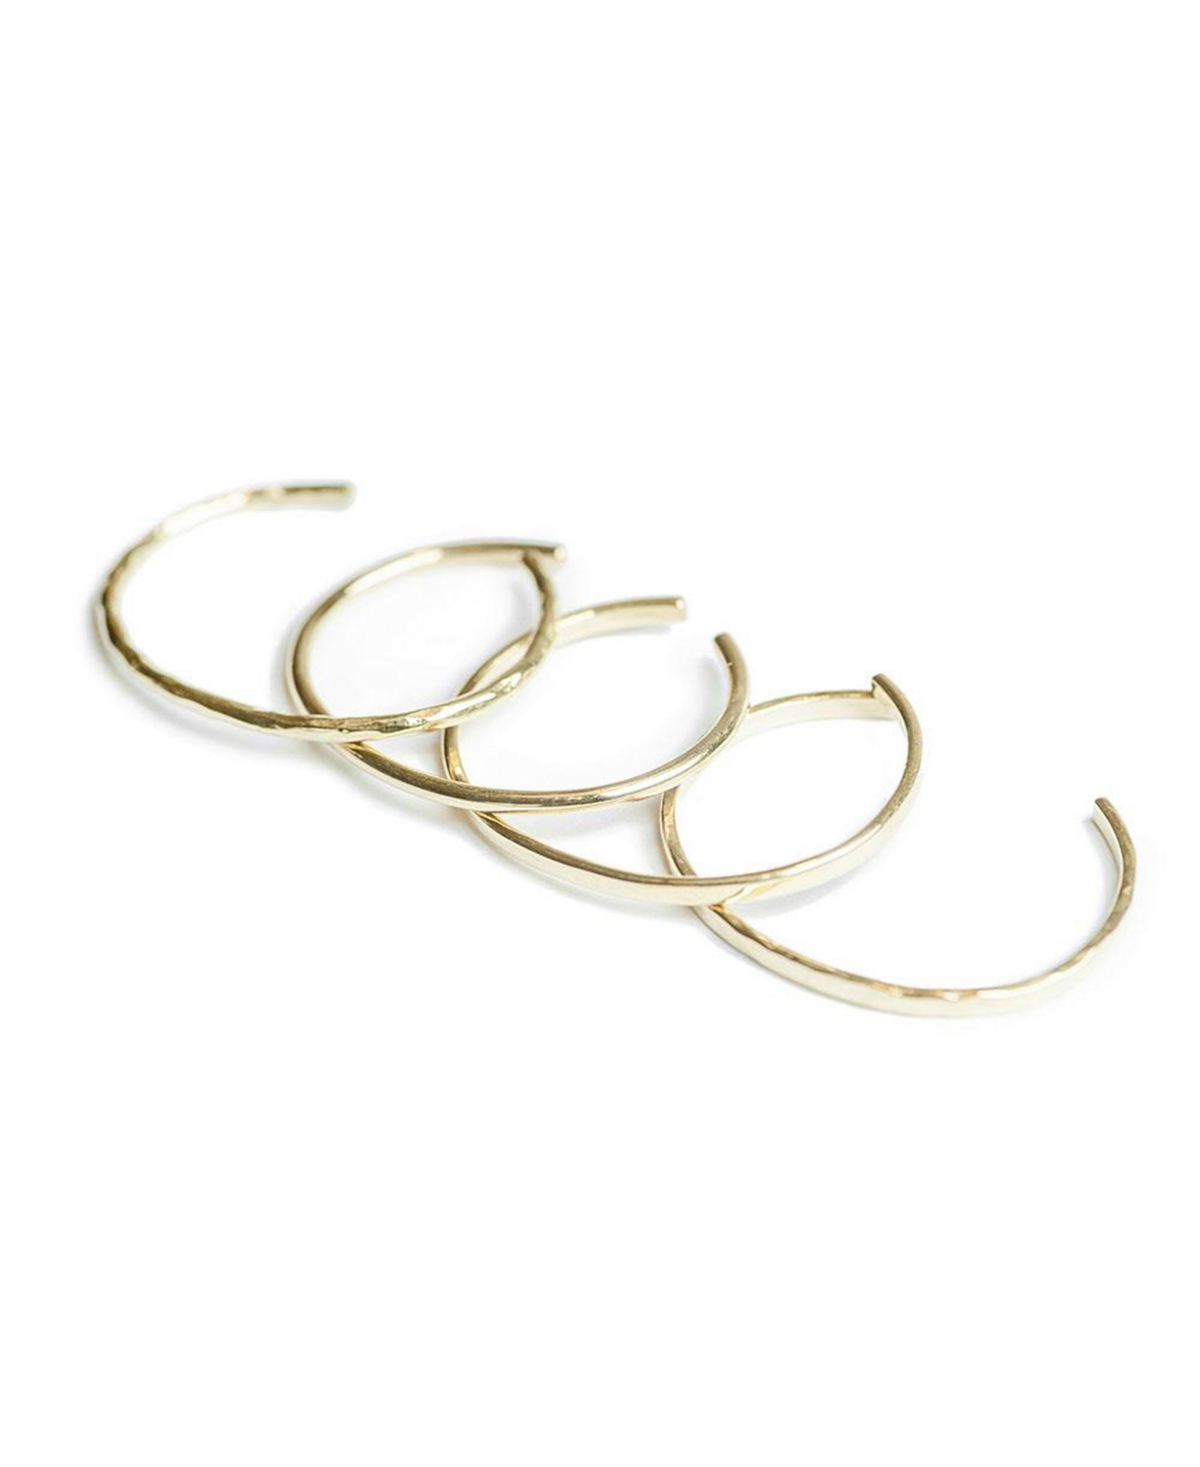 Soko 24k Gold-plated Delicate Bangle Bracelet 4 Piece Set